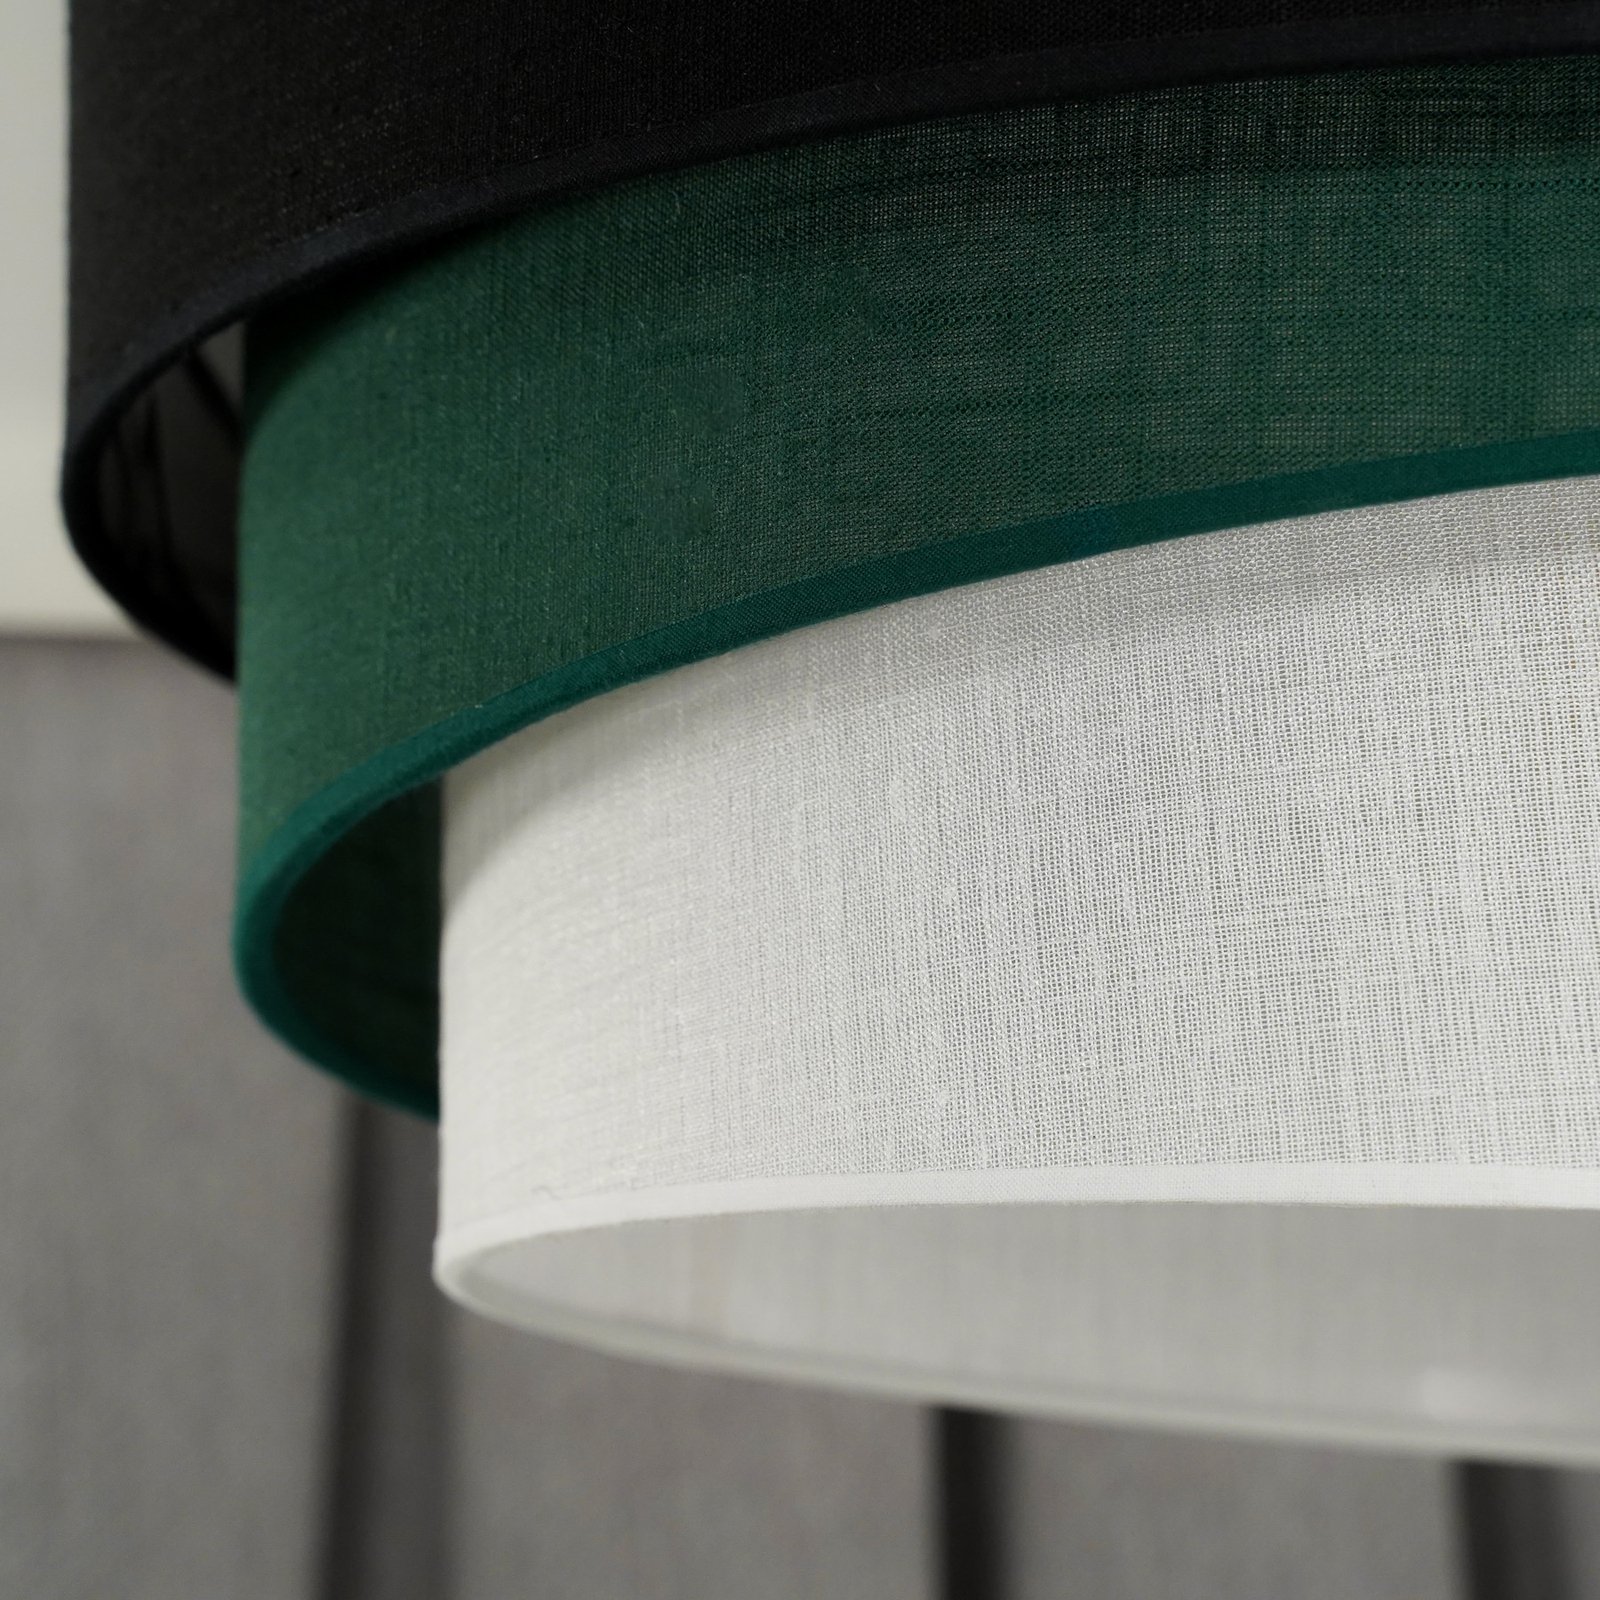 Euluna pendant light Trio, black/green/white, textile, Ø 45 cm